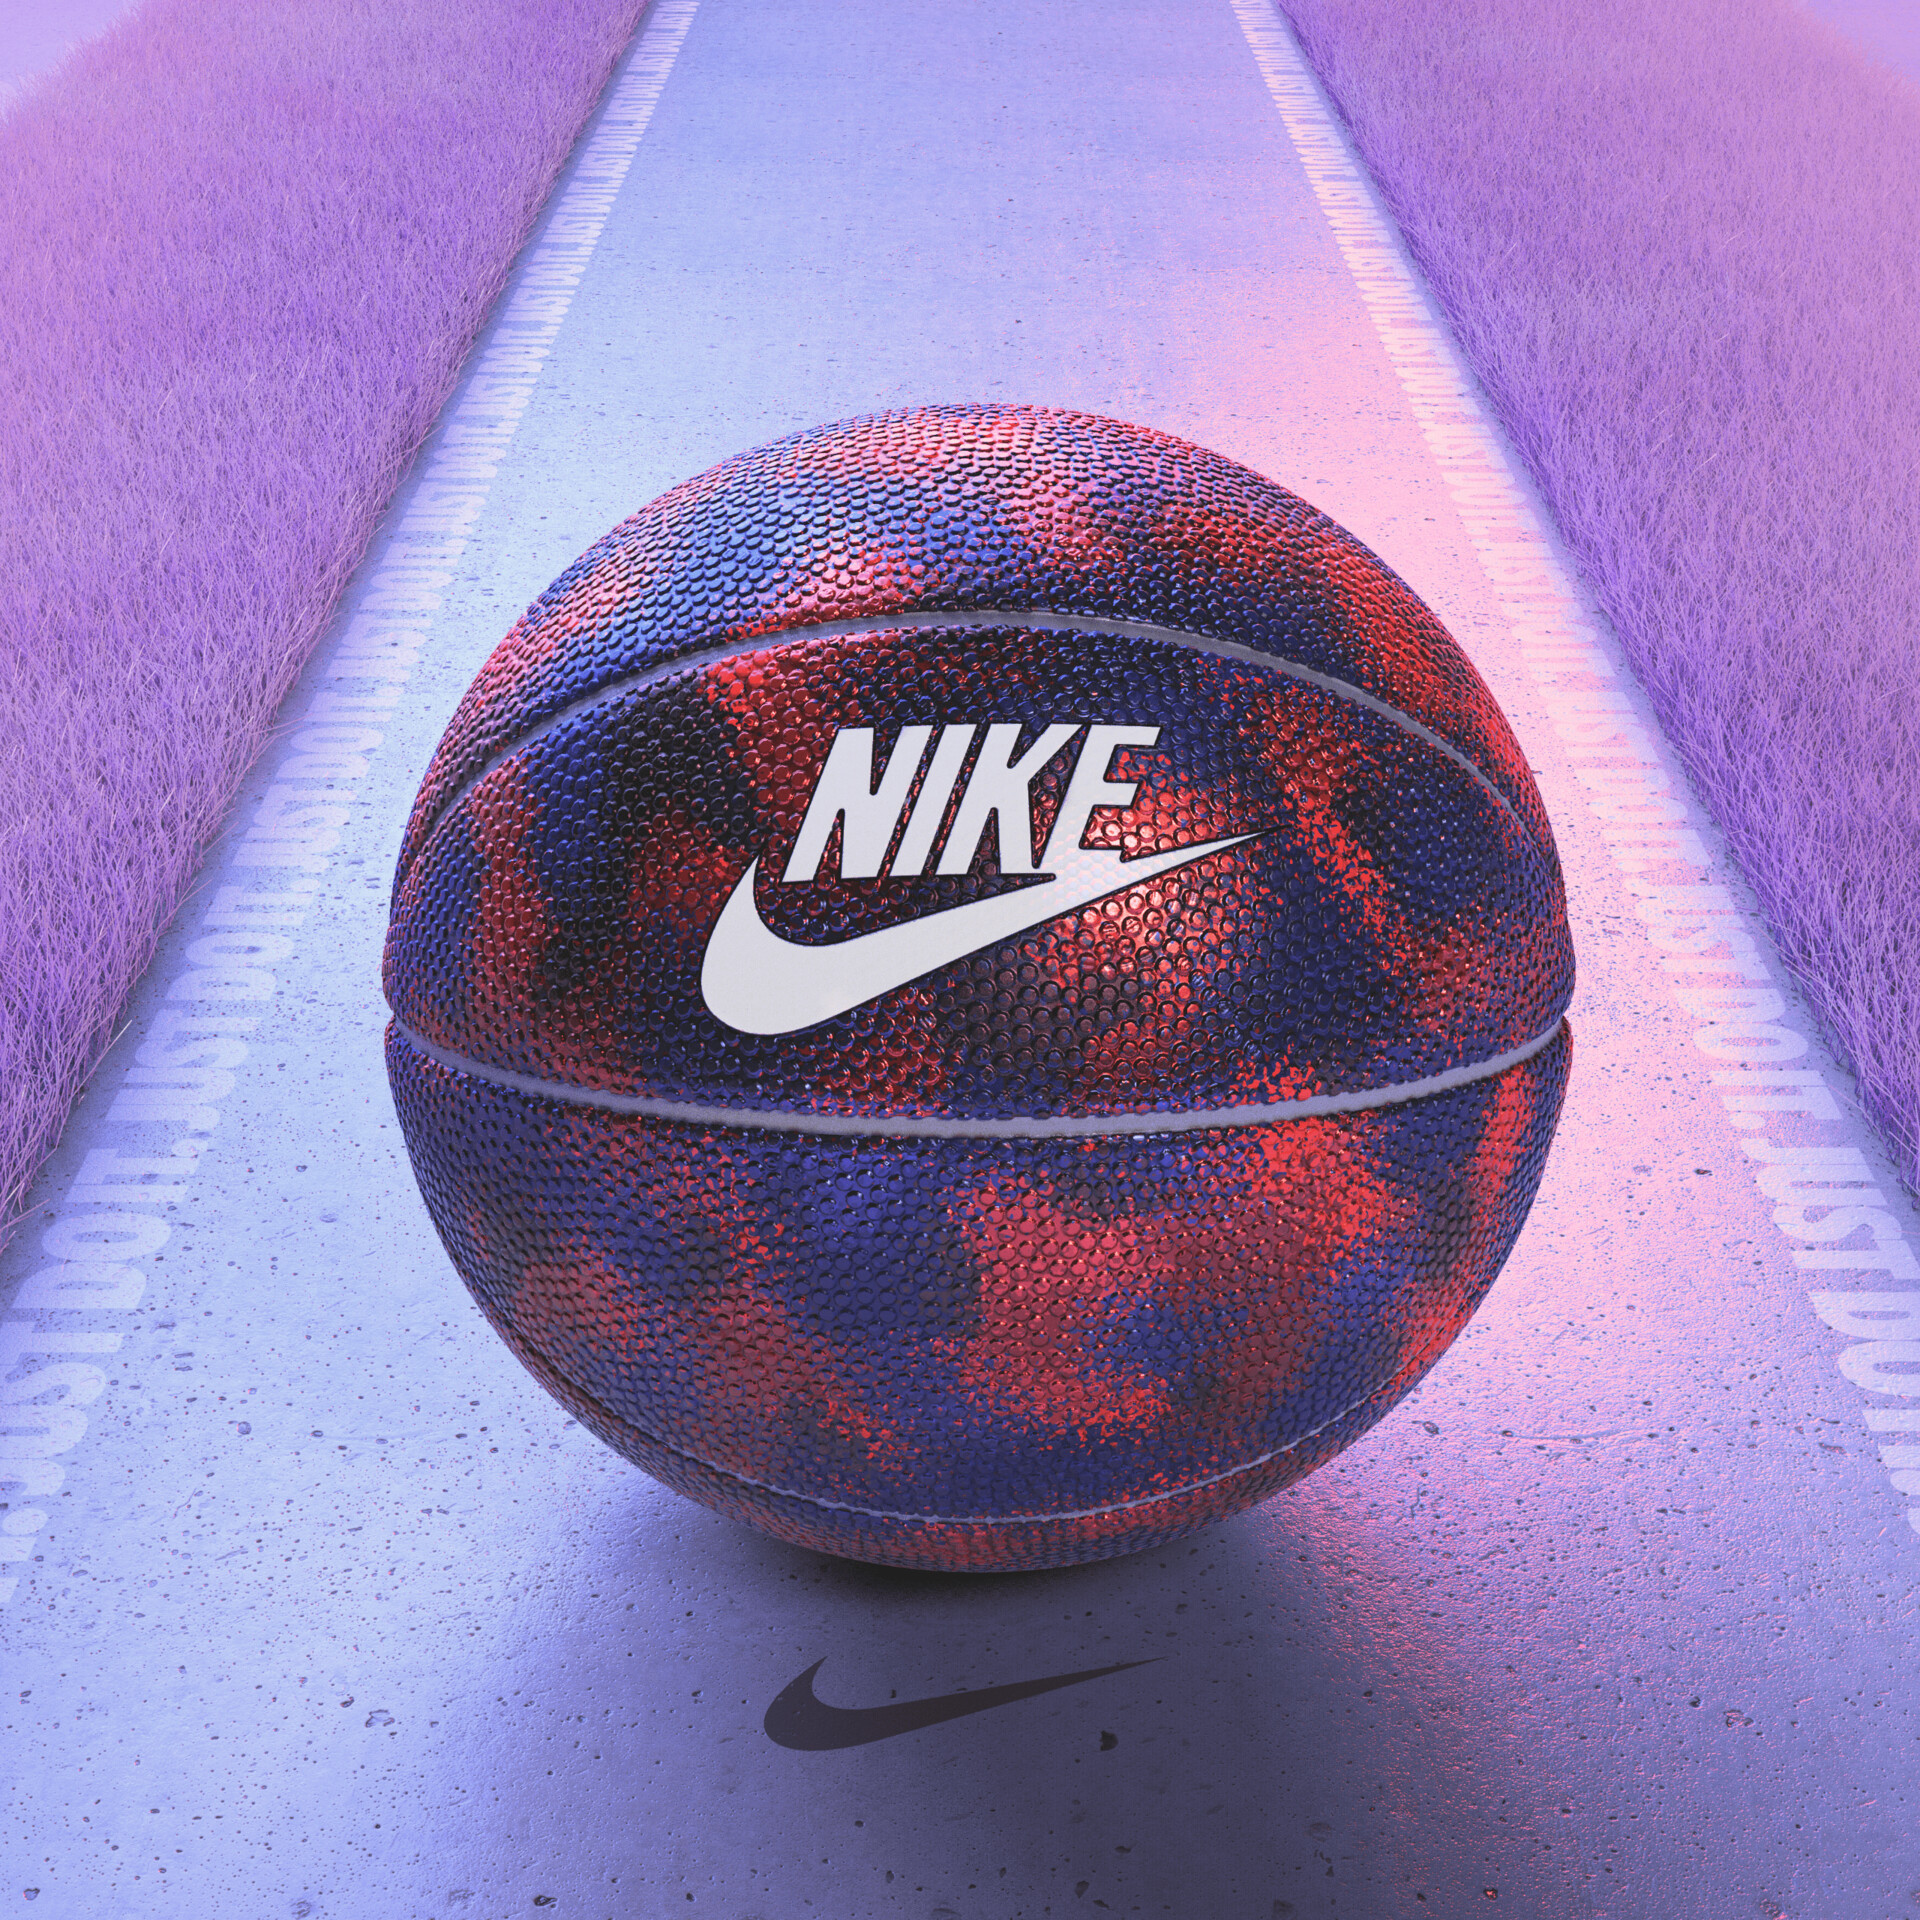 Nike Girls Basketball Wallpapers